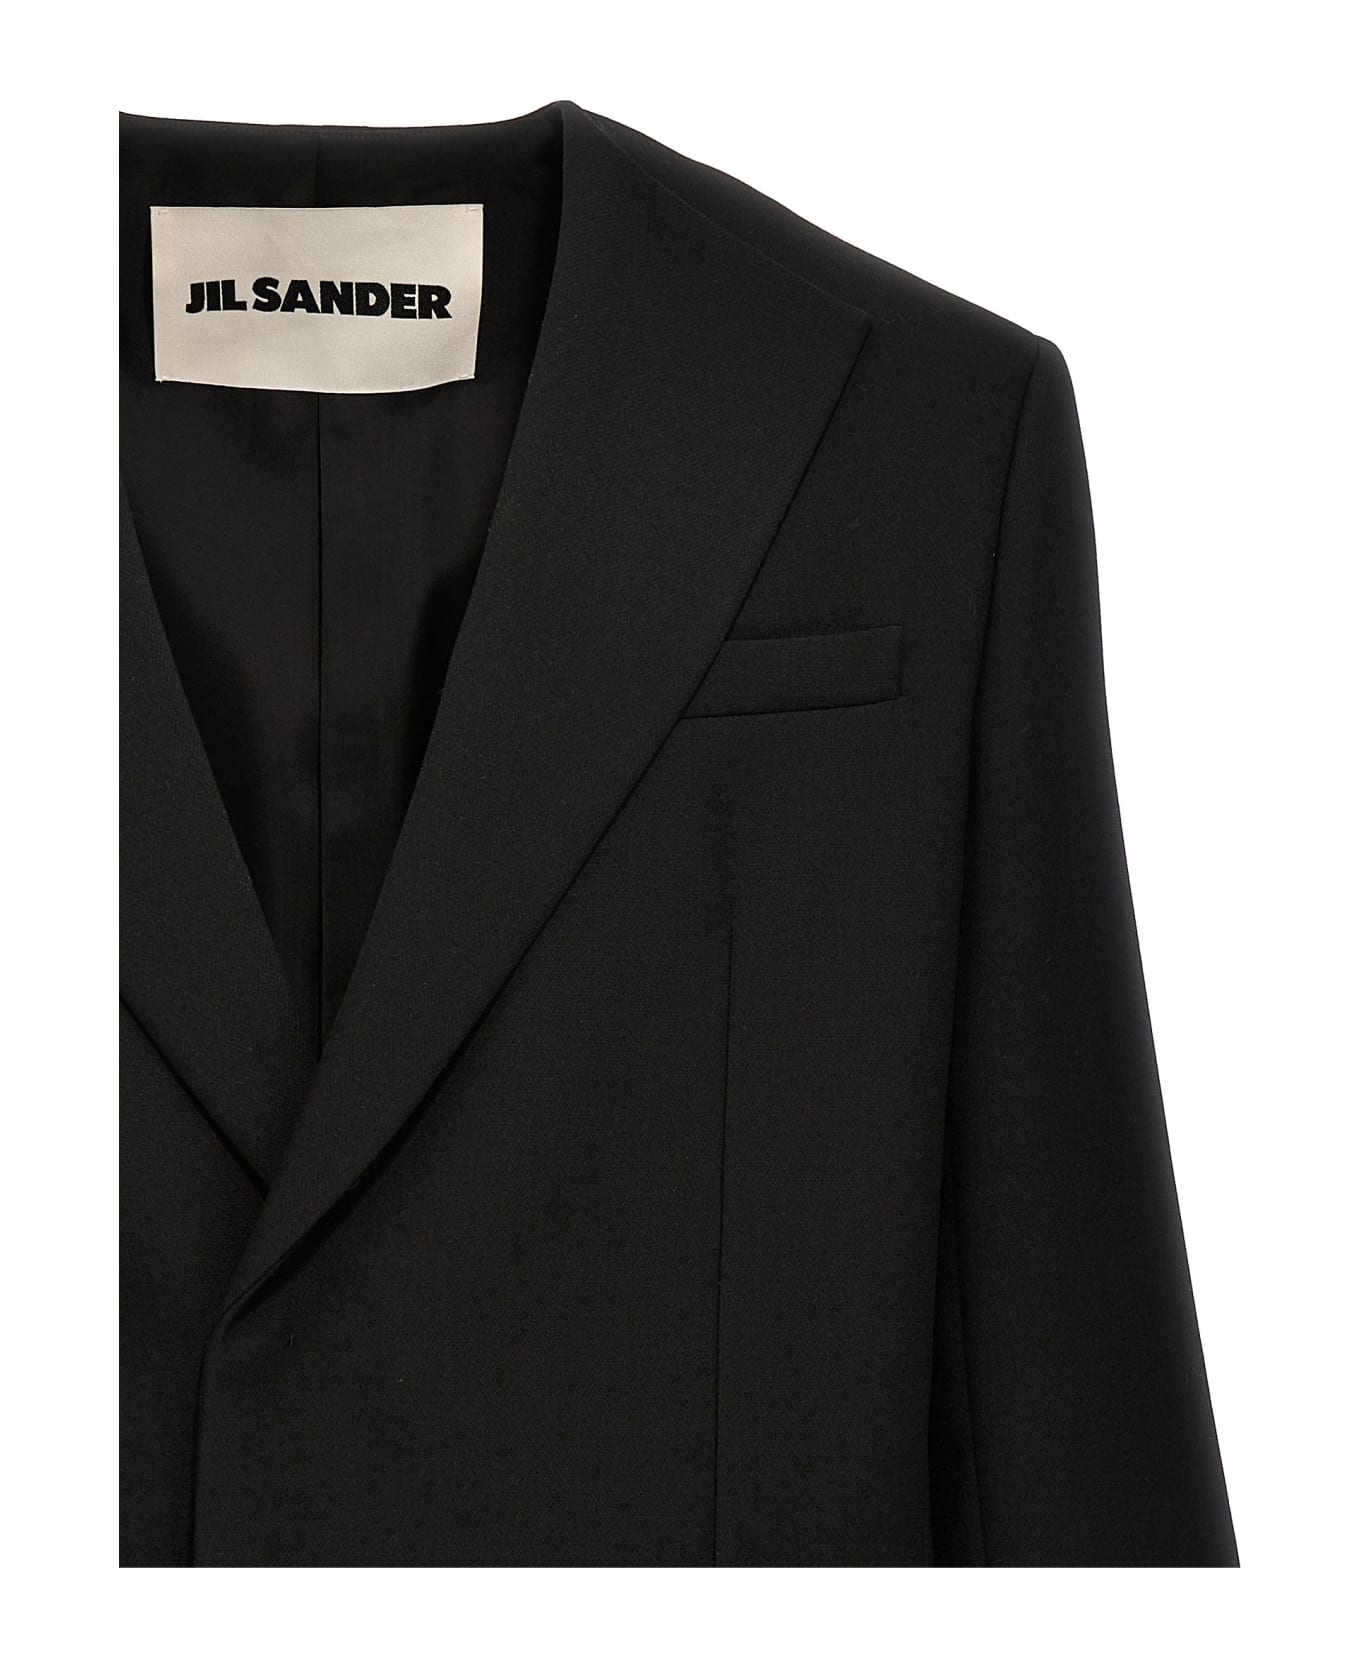 Jil Sander '30' Blazer - Black  